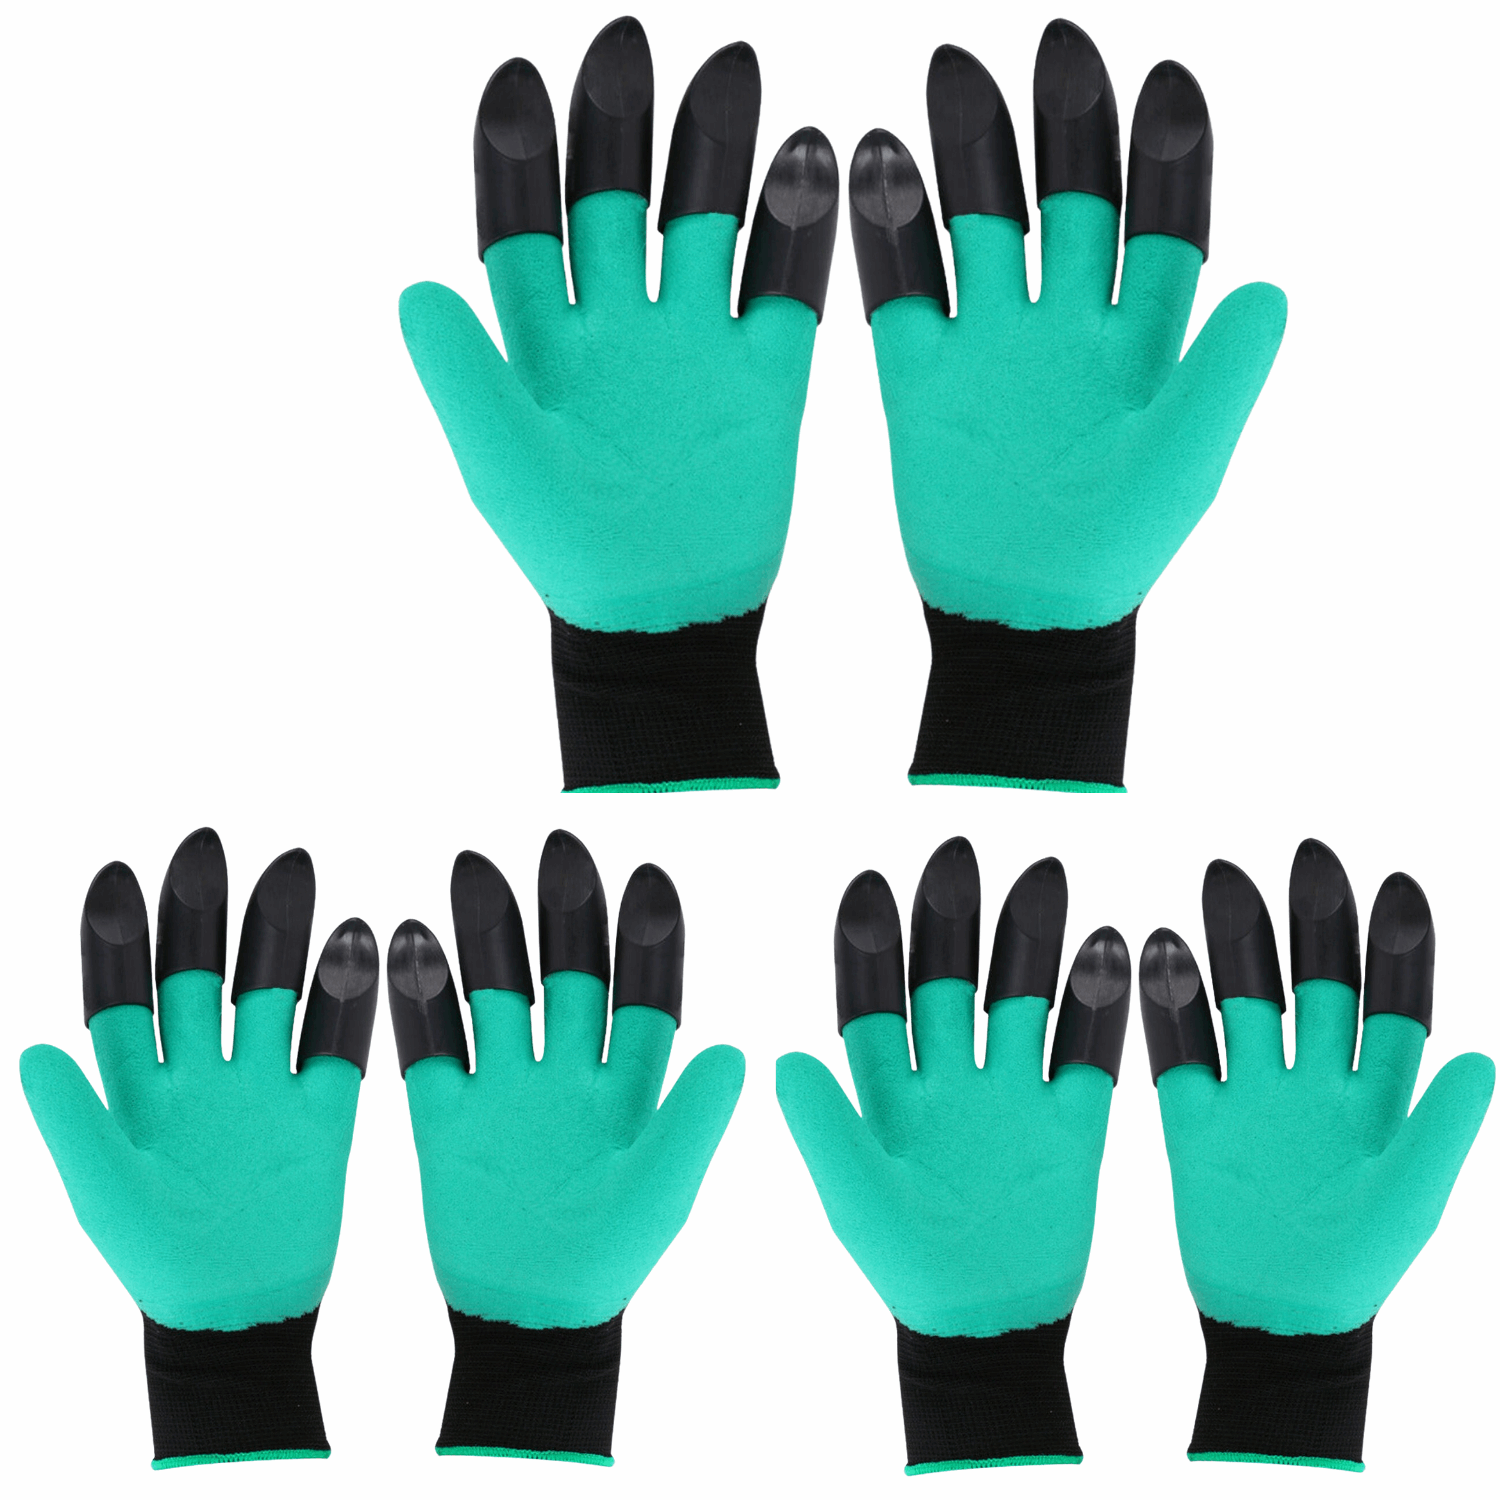 Garden Gloves with Claws, Gardening Claws